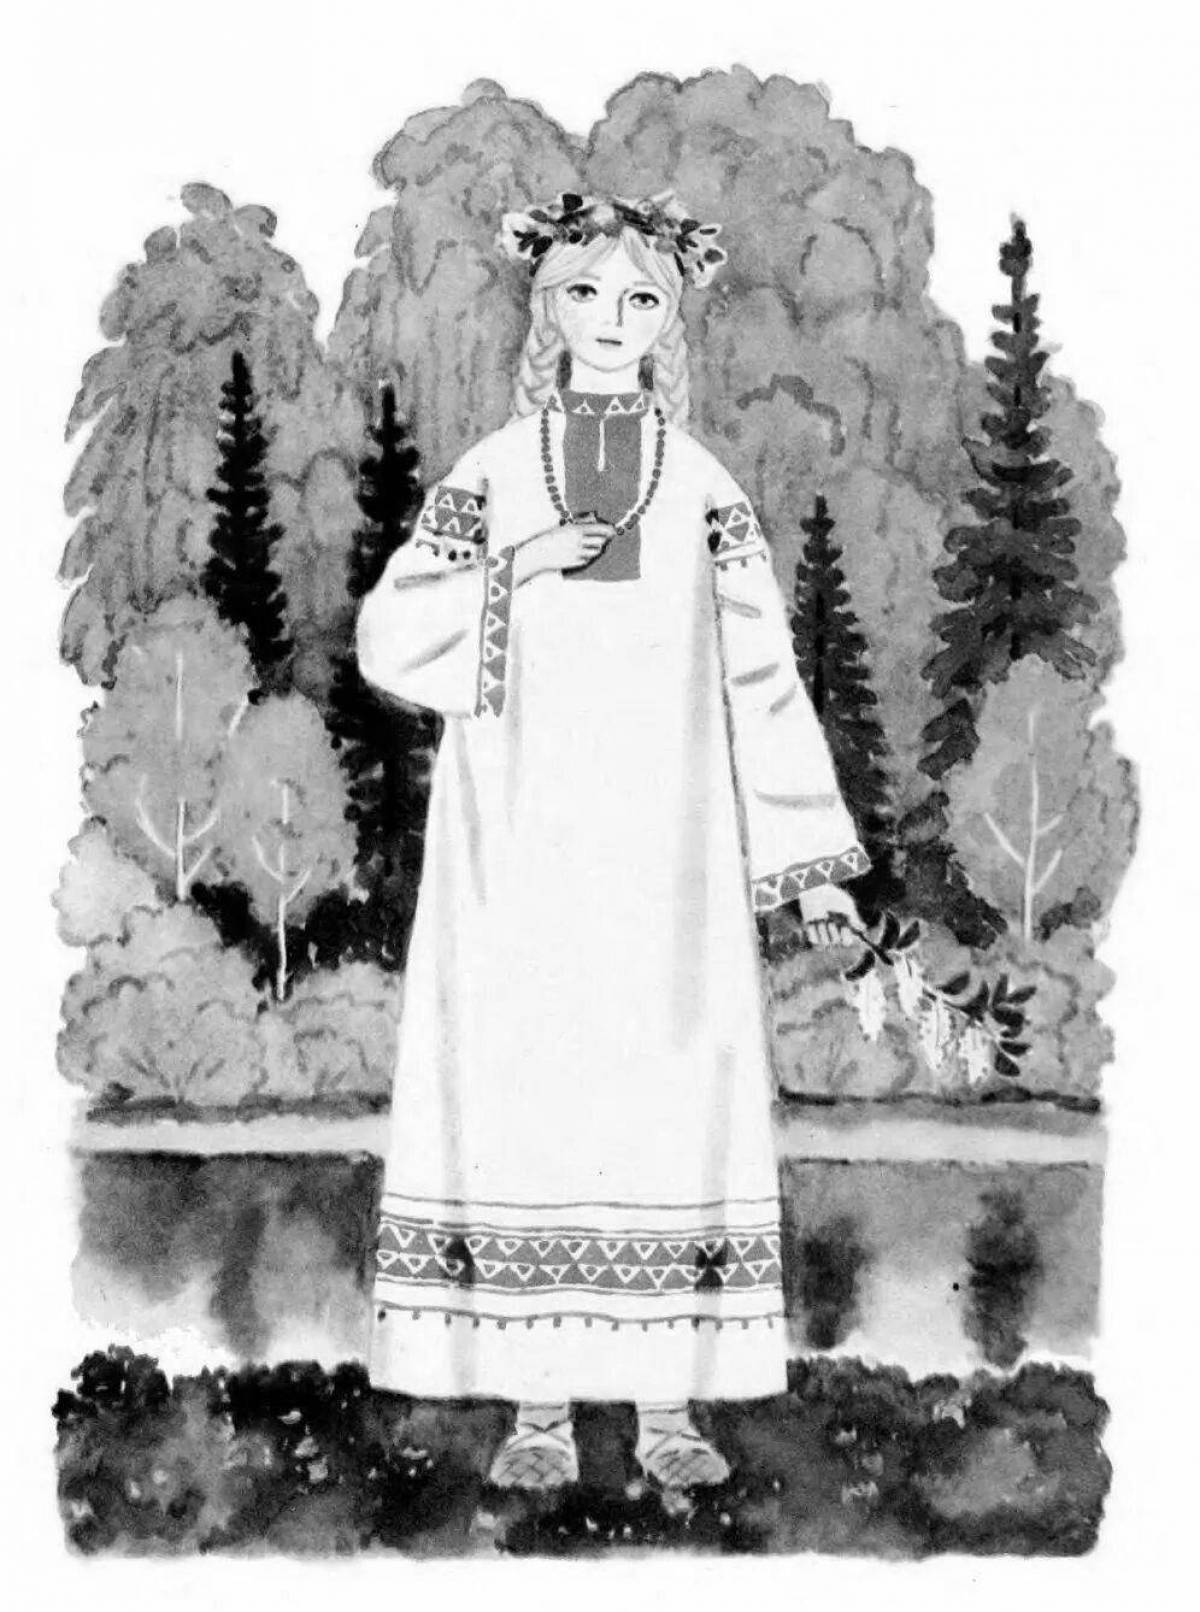 Rimsky Korsakov's bright coloring of the opera The Snow Maiden